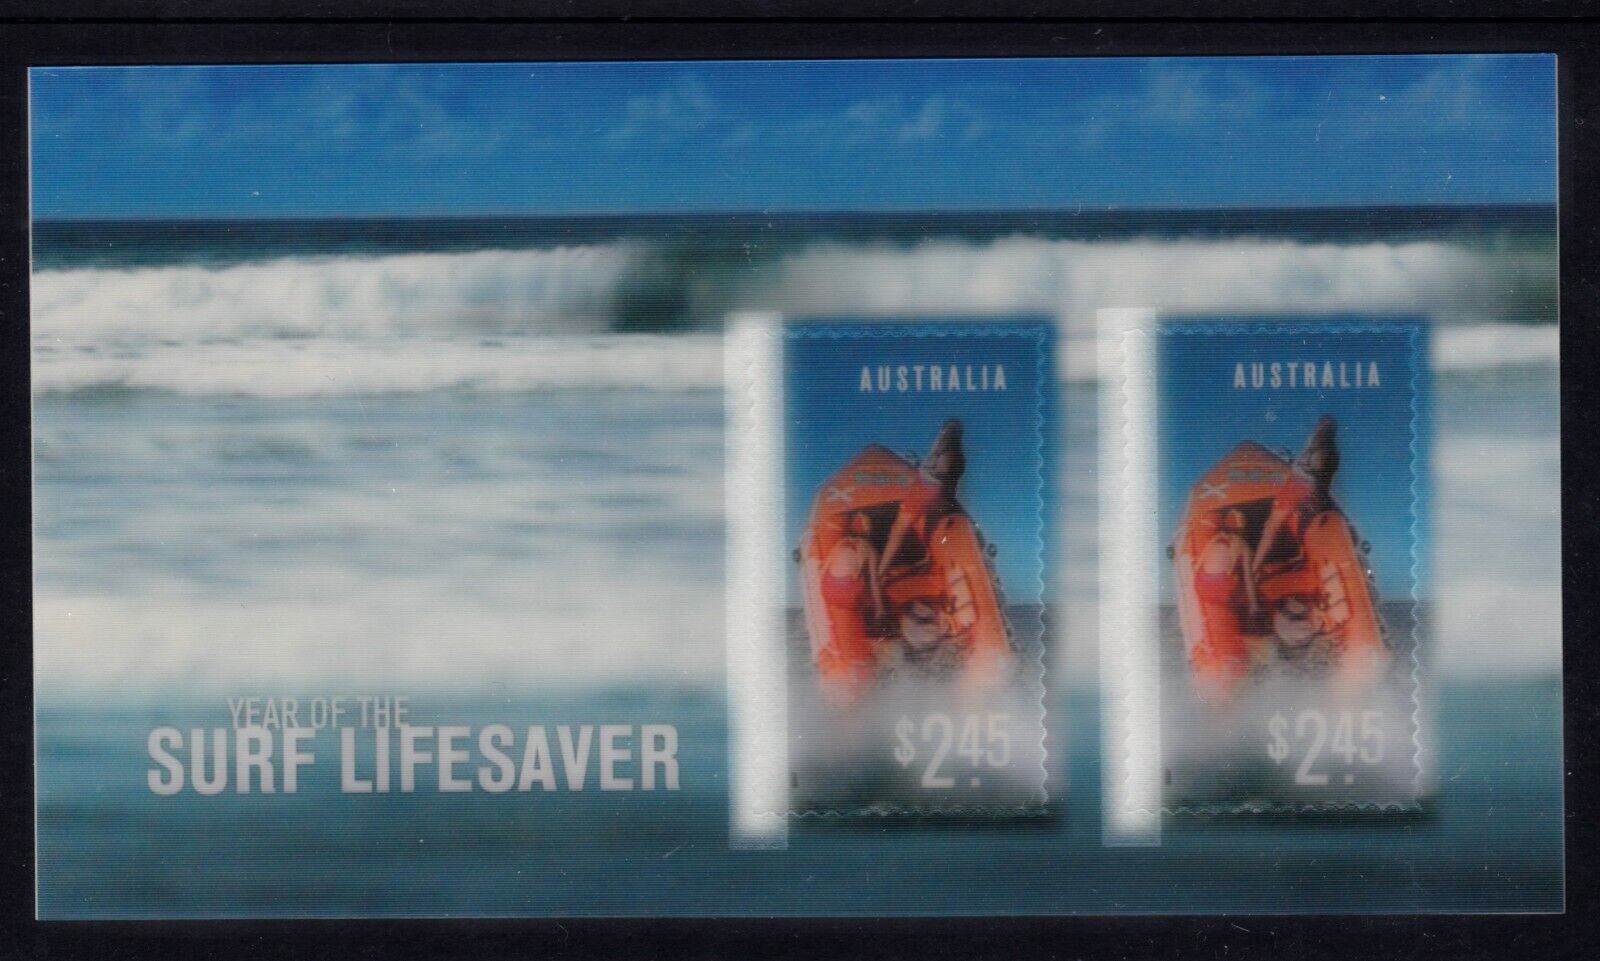 2007 YEAR OF THE SURF LIFESAVER 3D MINIATURE SHEET DECIMAL STAMP